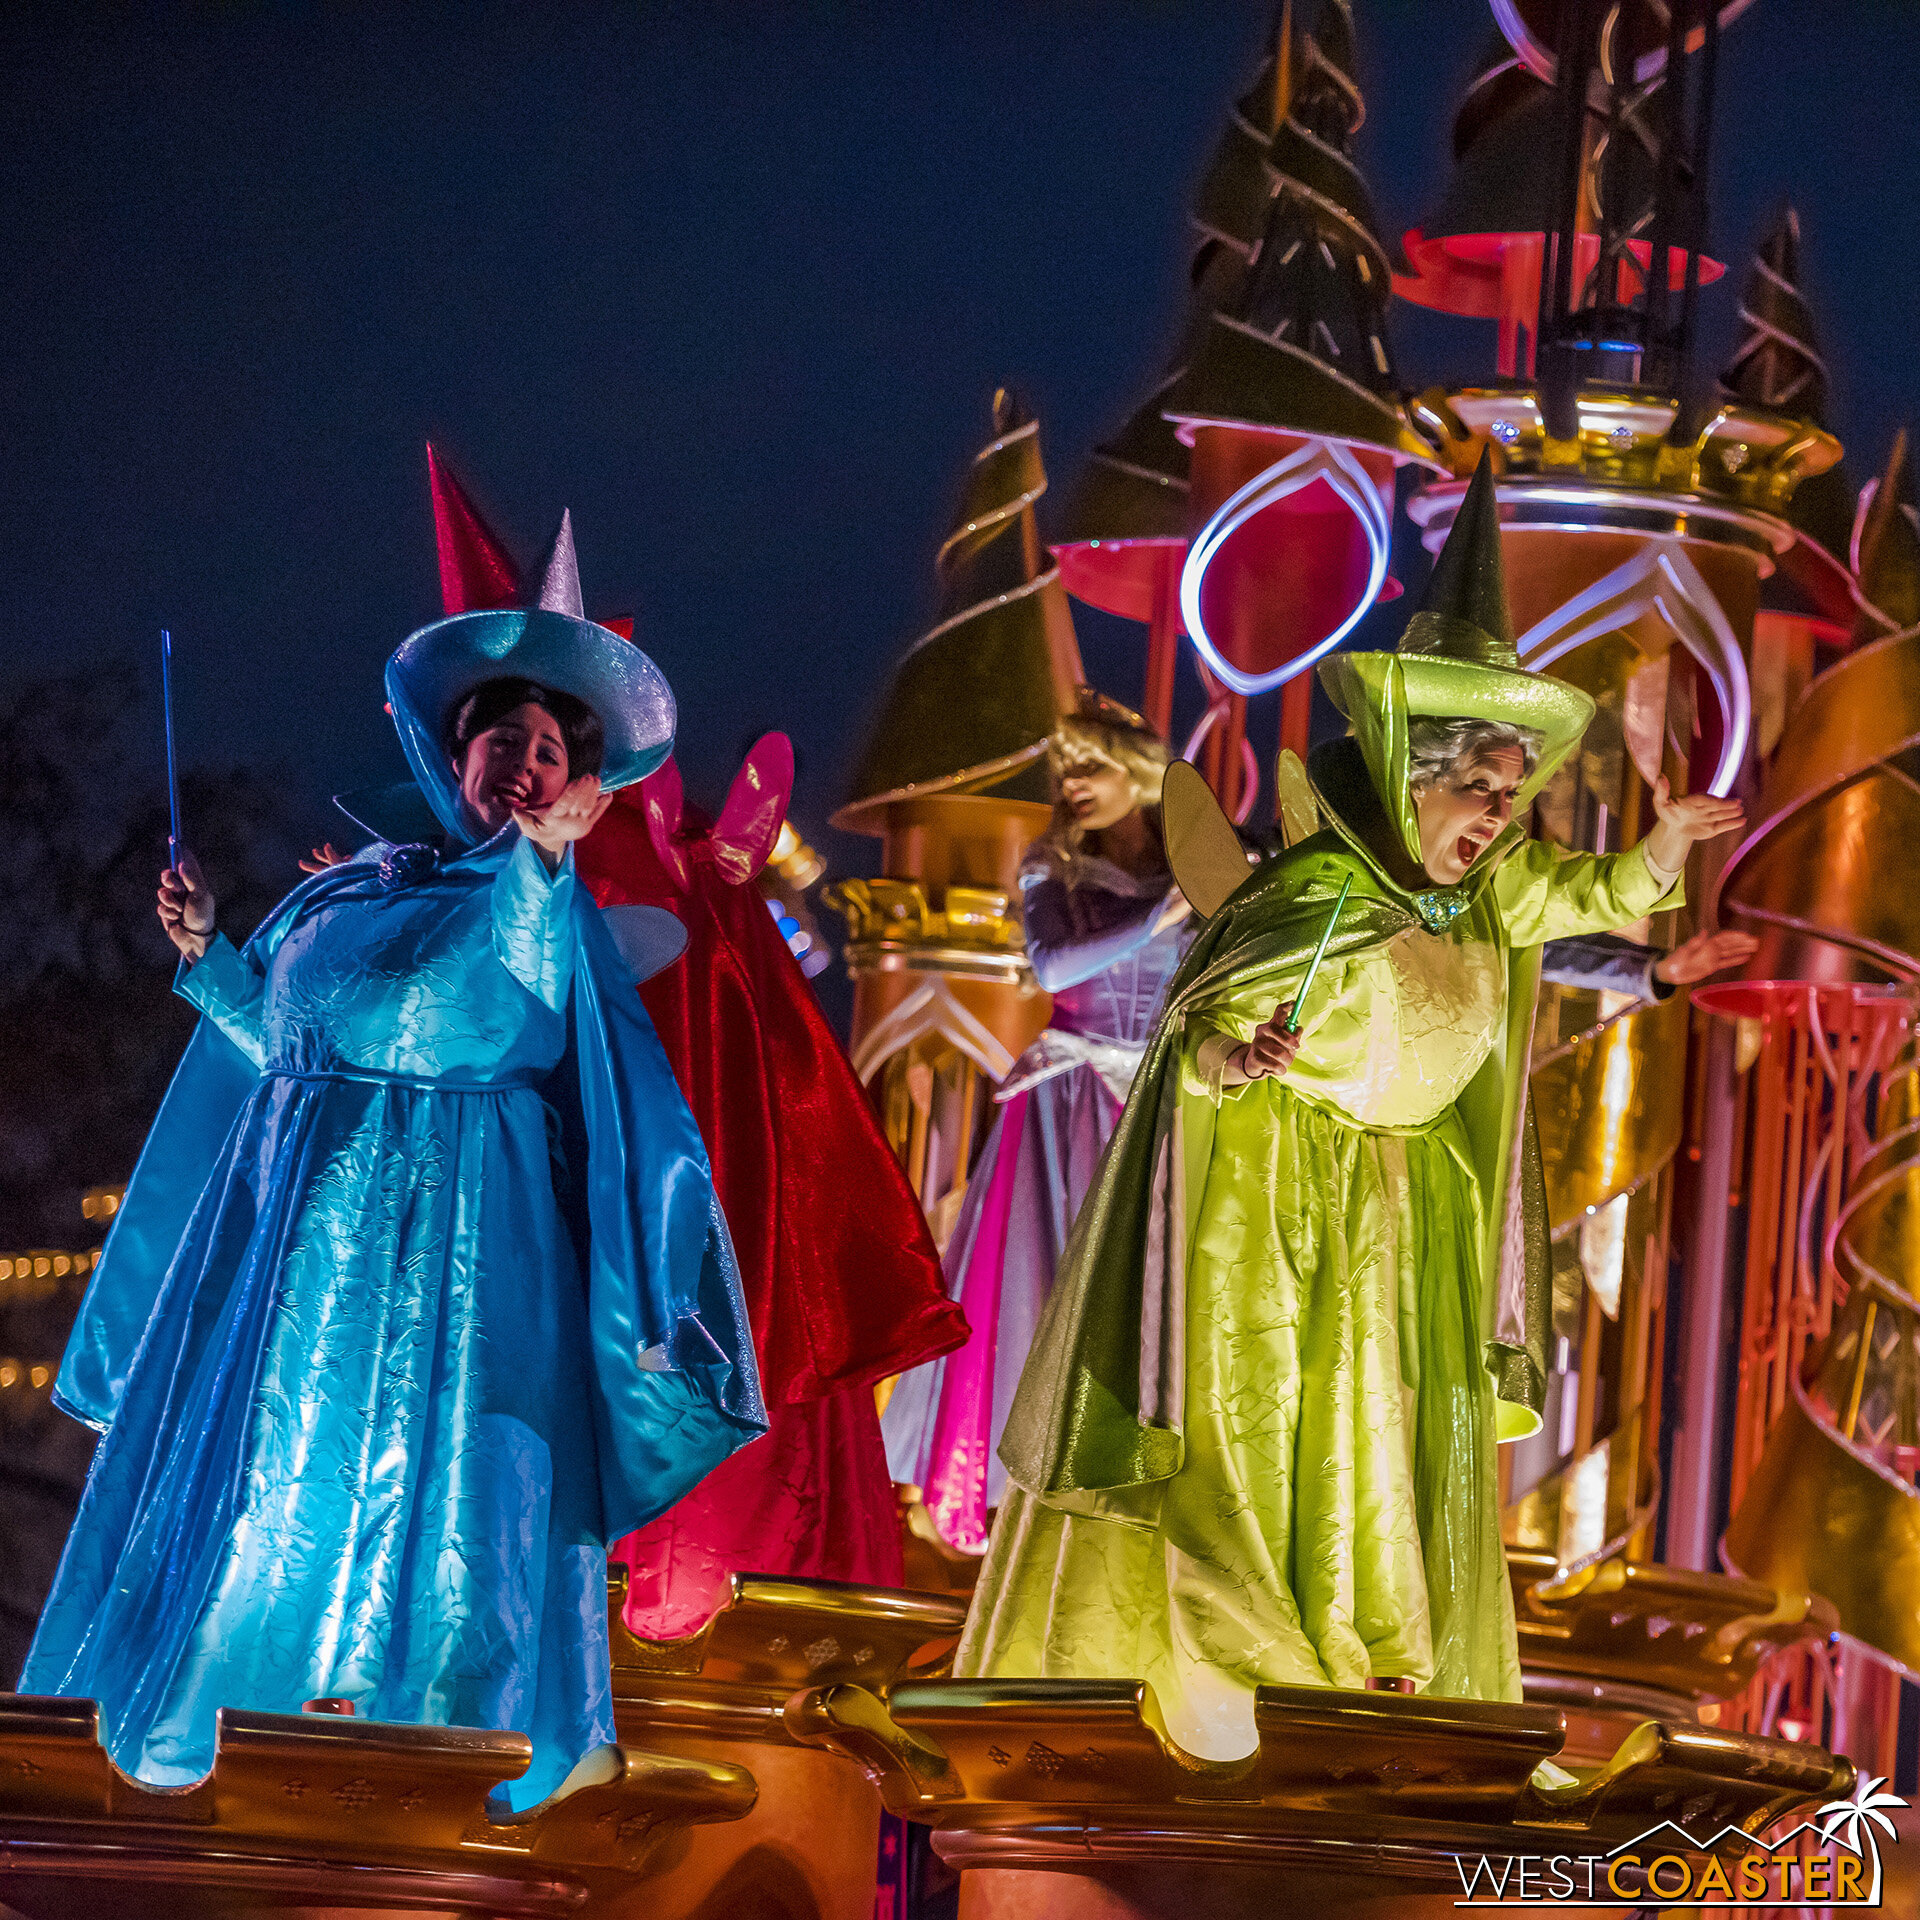  The good fairies from  Sleeping Beauty  greet their adoring fans. 